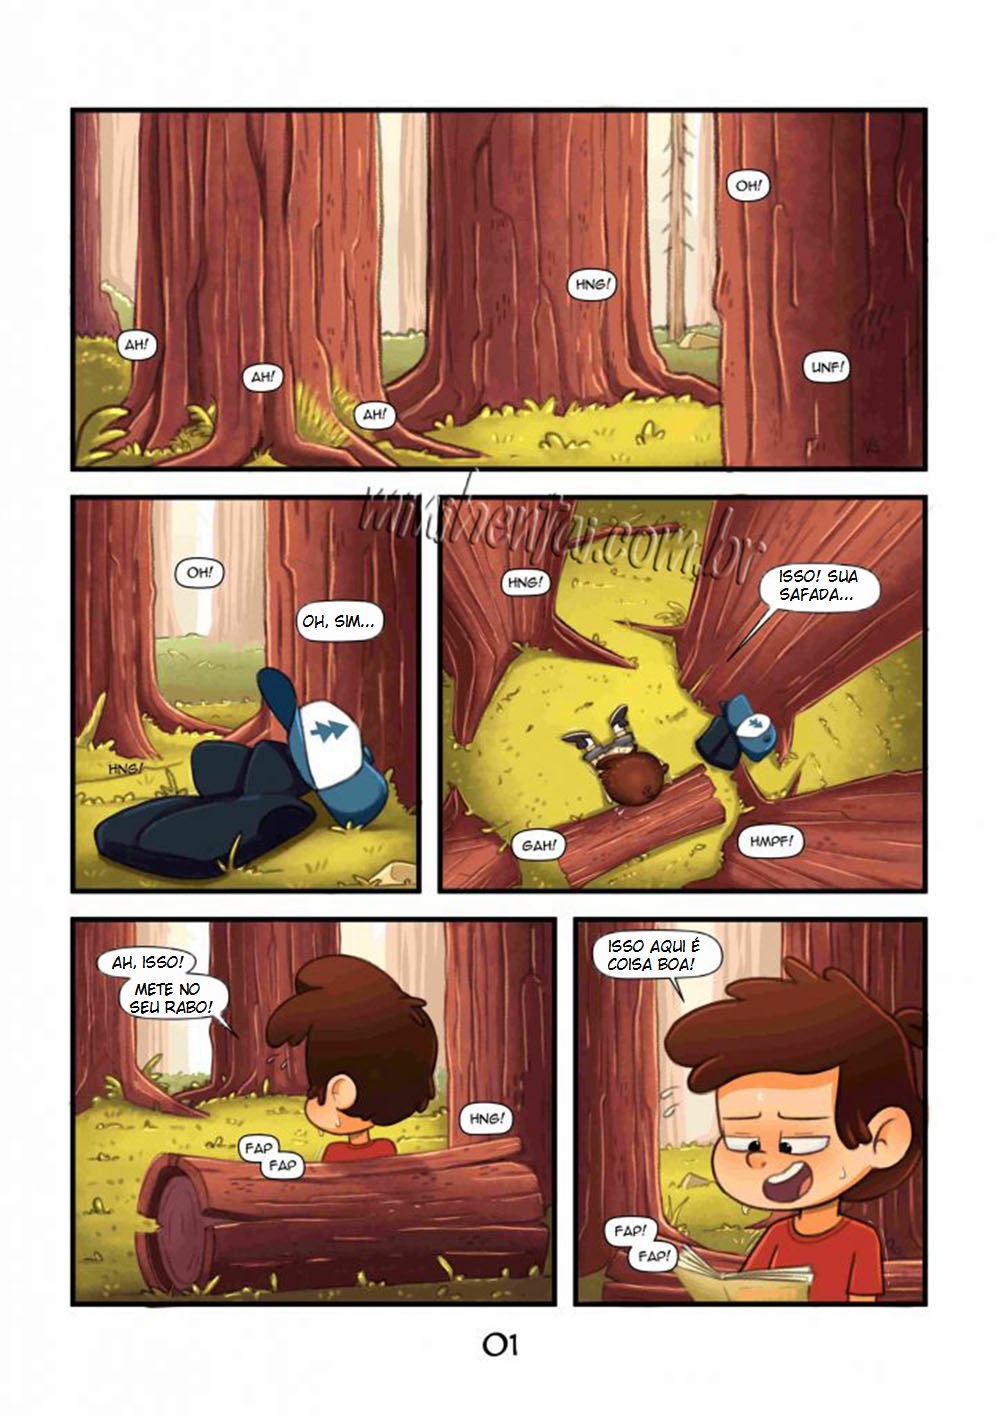 Real Life Gravity Falls Porn - Secret Of The Woods â€“ Gravity Falls | RevistaseQuadrinhos ...